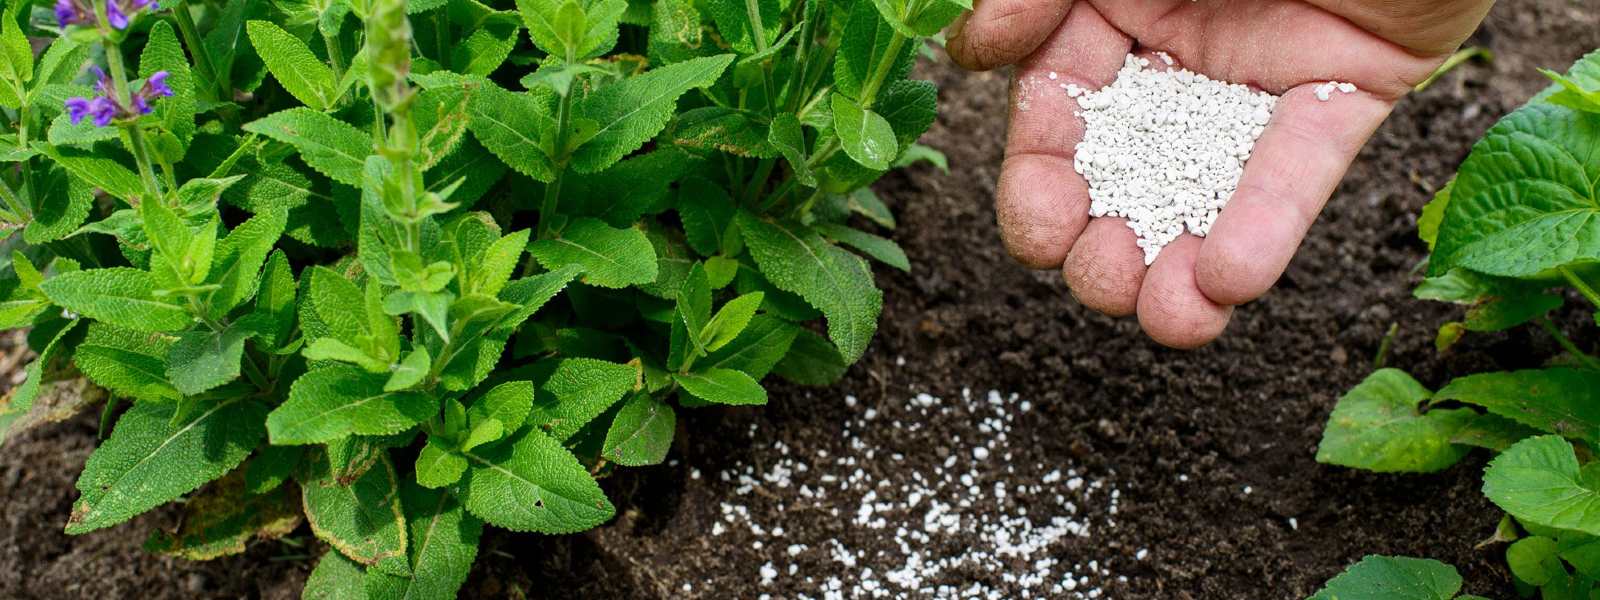 Lanka to introduce control price for fertilizer